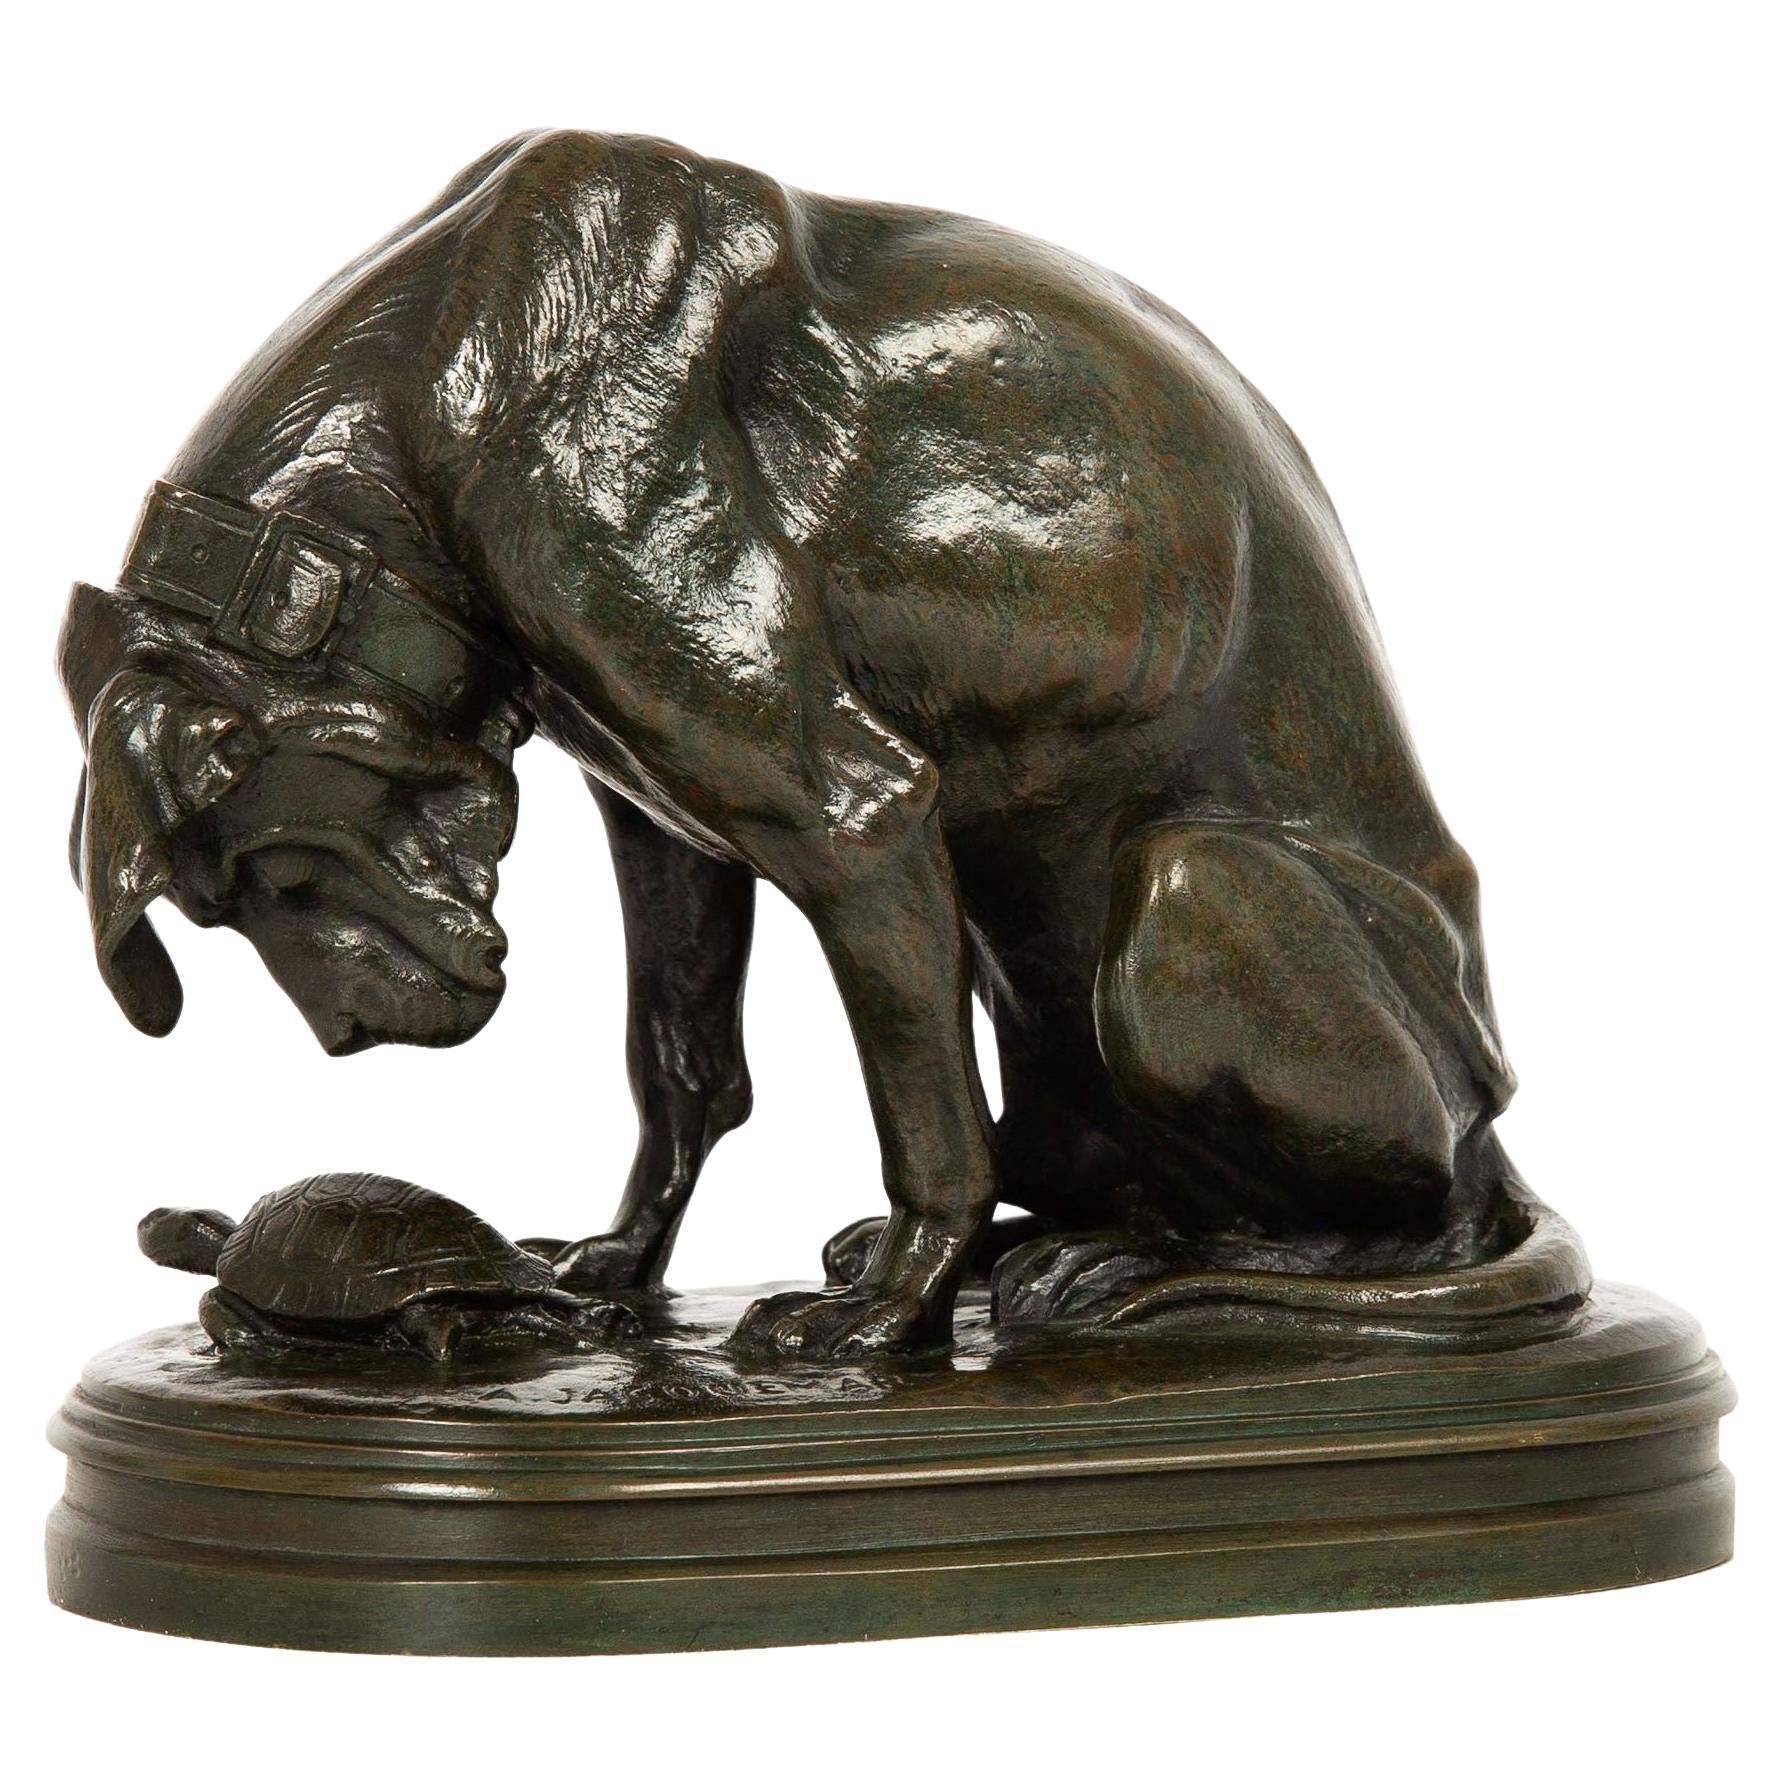 French Antique Bronze Sculpture “Hound & Tortoise” by Henri Jacquemart For Sale